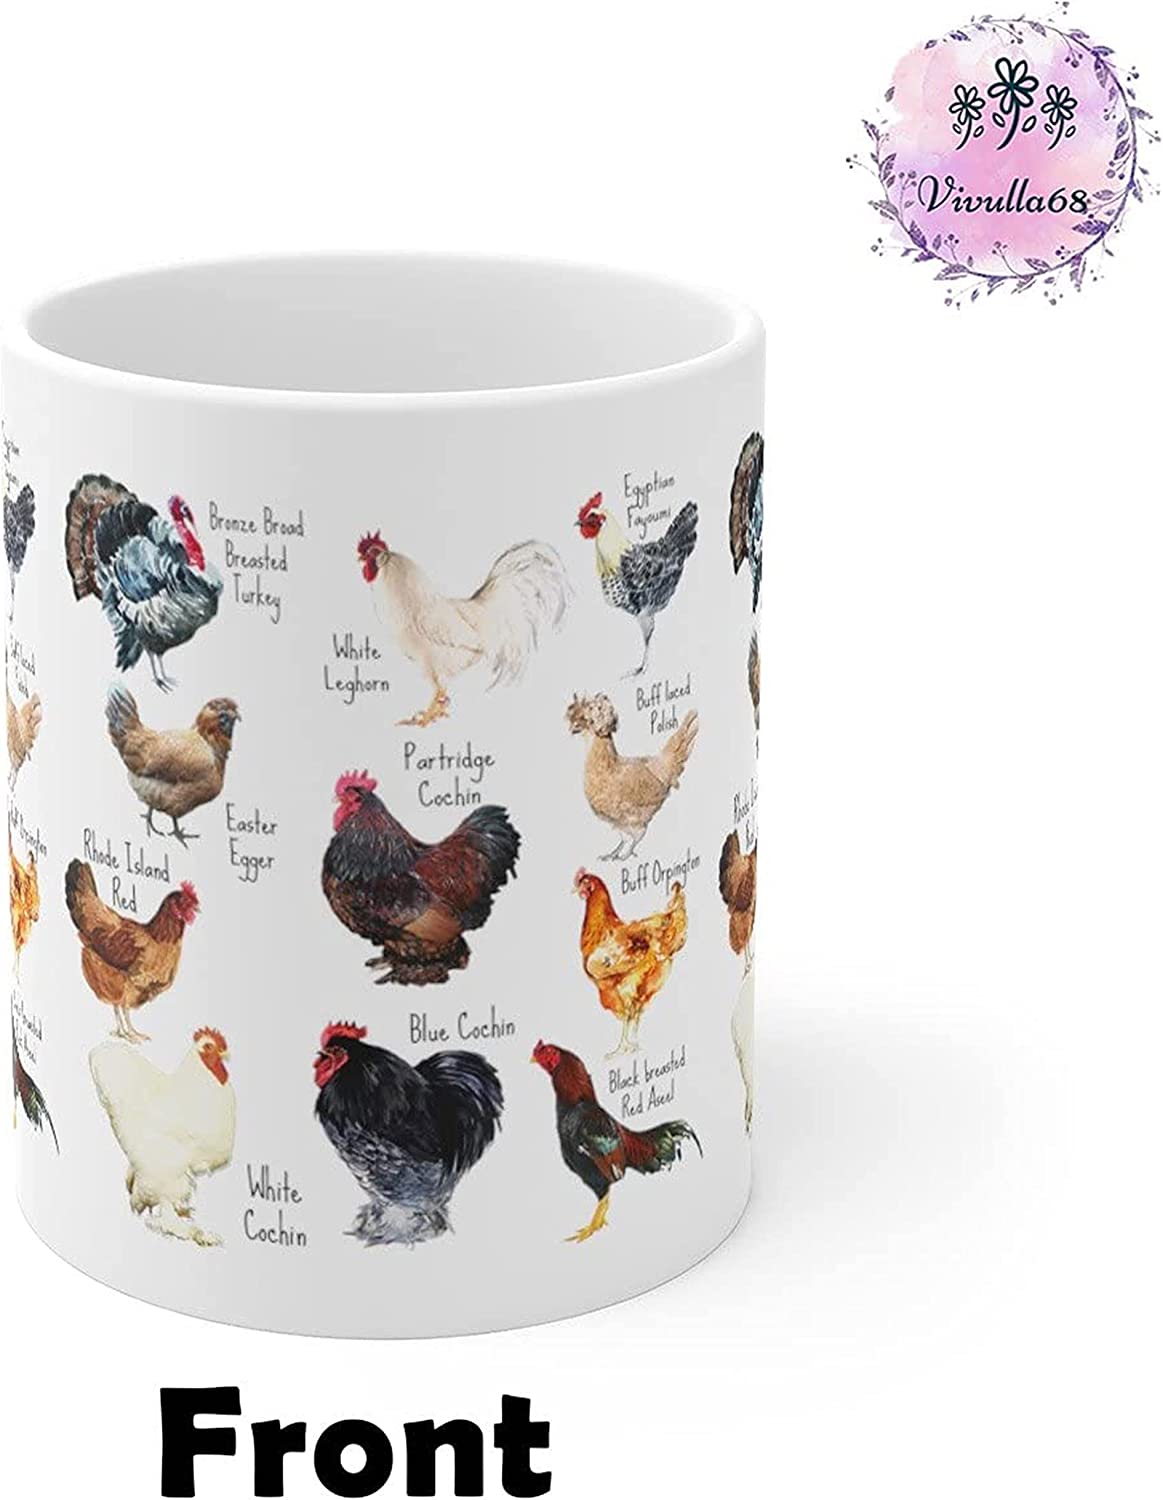 Breeds of Chicken Coffee Mug 11 Oz, Chicken Gifts For Chicken Lovers, Women, Chicken Mom Stuffs, Chicken Mug Gifts for Chicken Owners, Chicken Themed Gifts for Mothers Day